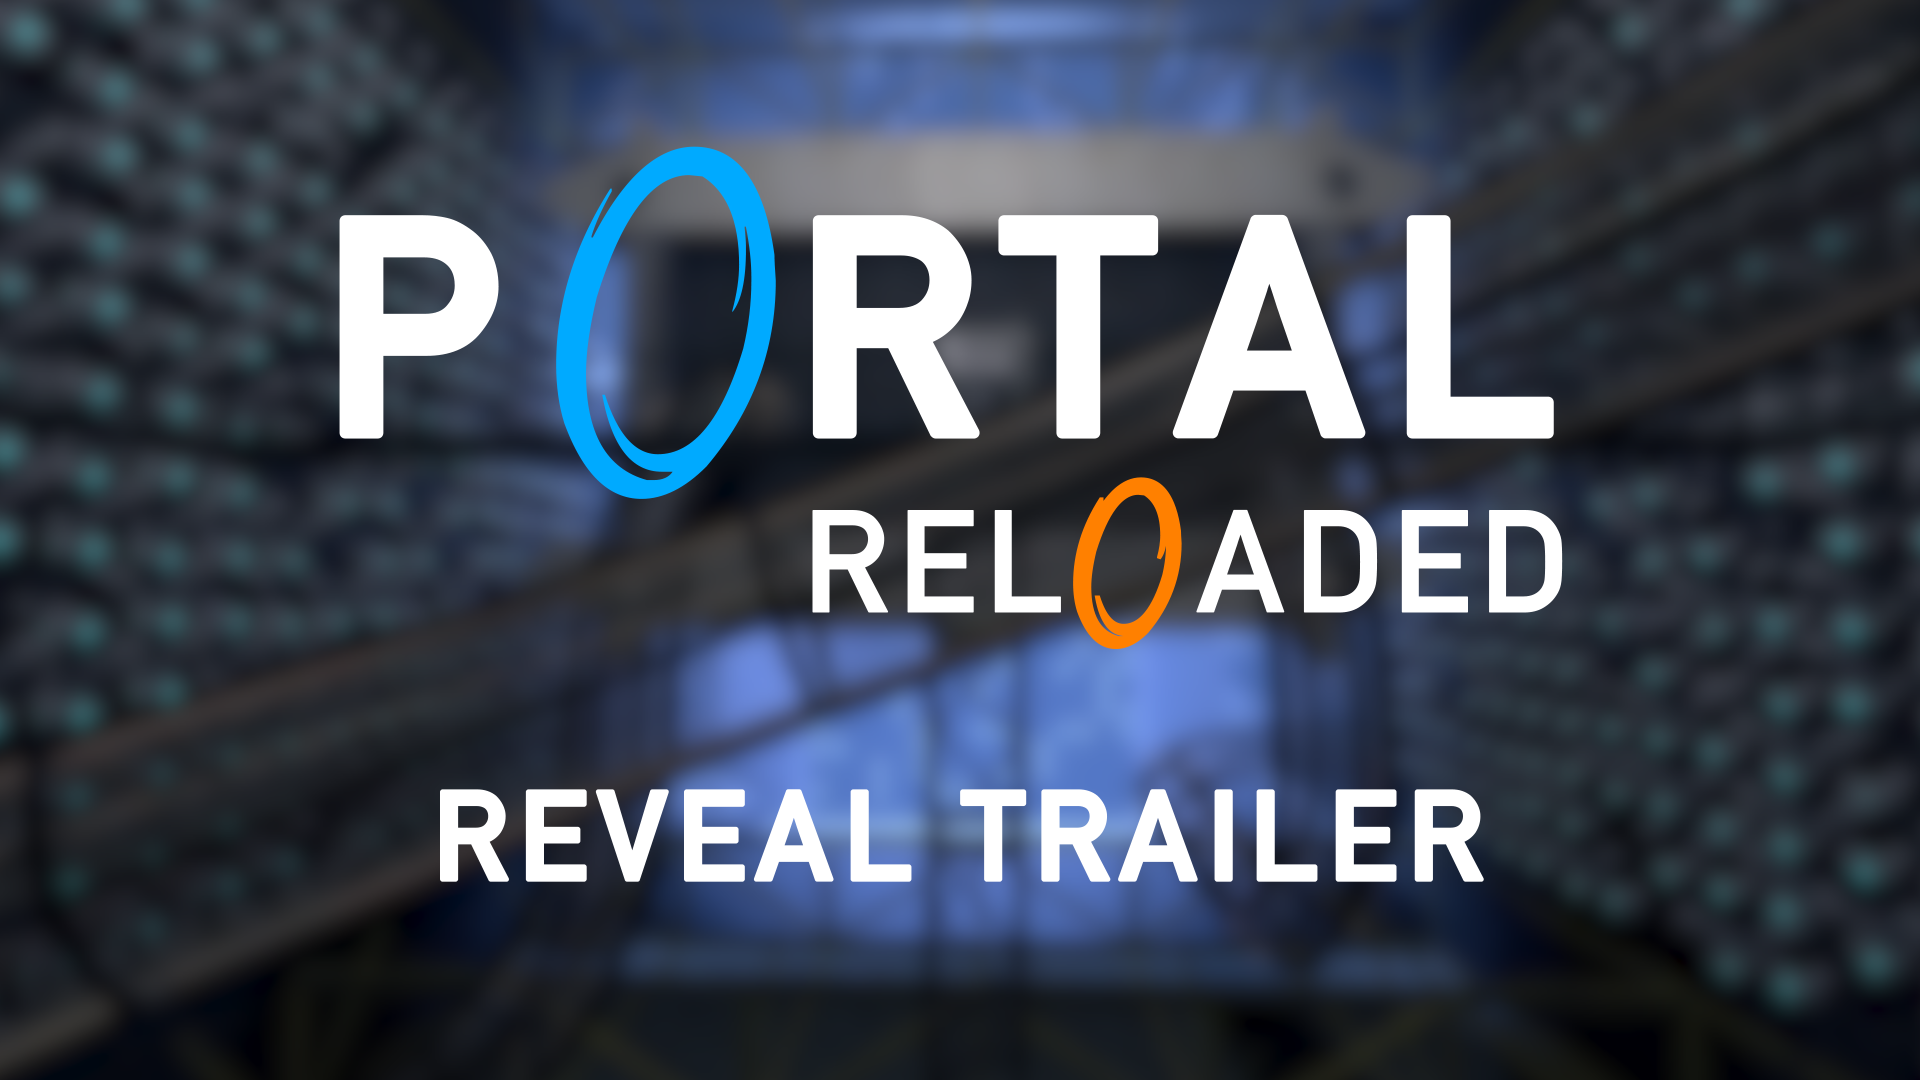 portal reloaded game